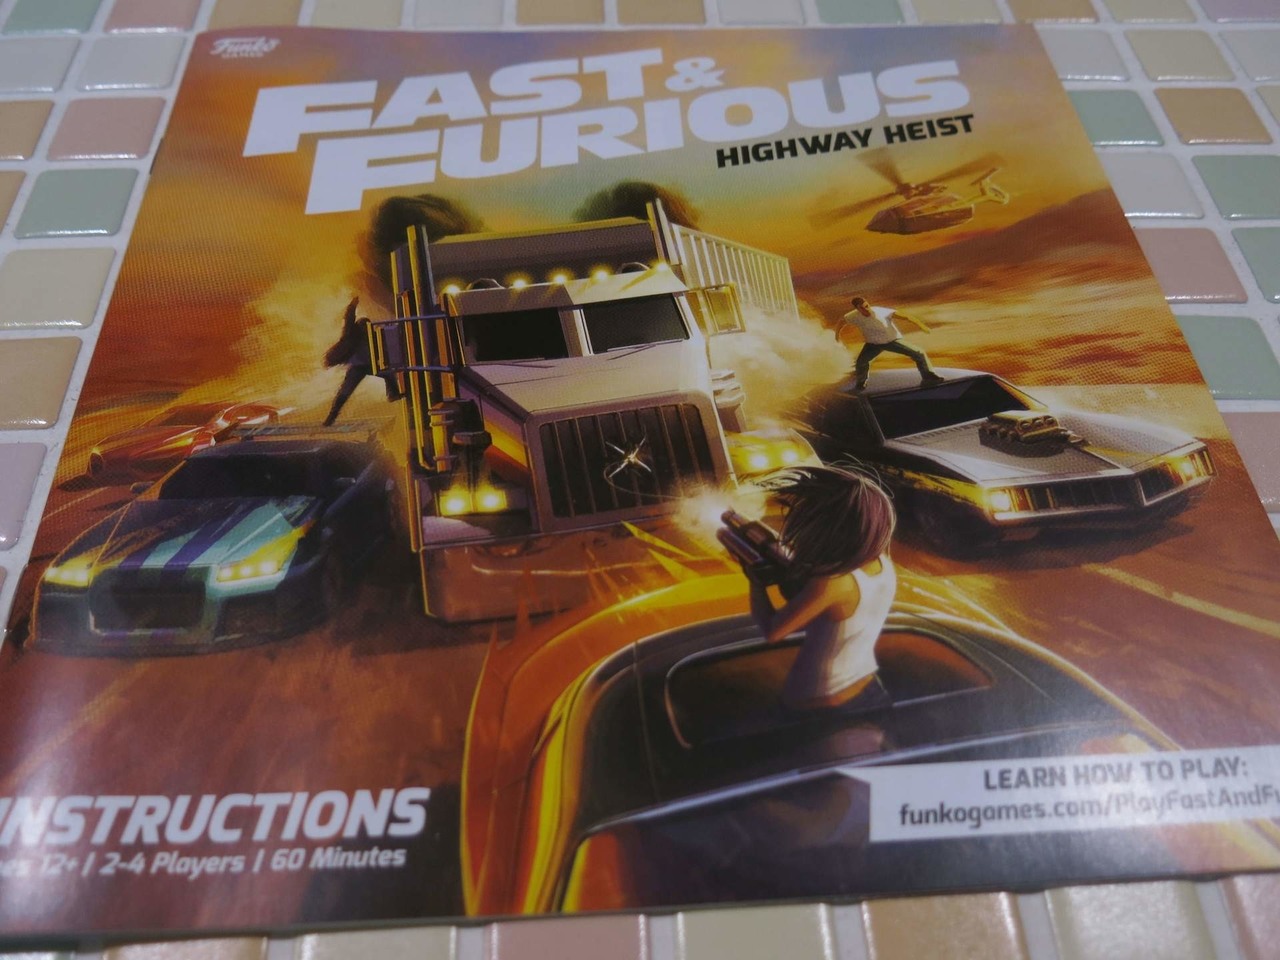 [規則] Fast & Furious: Highway Heist 玩命關頭